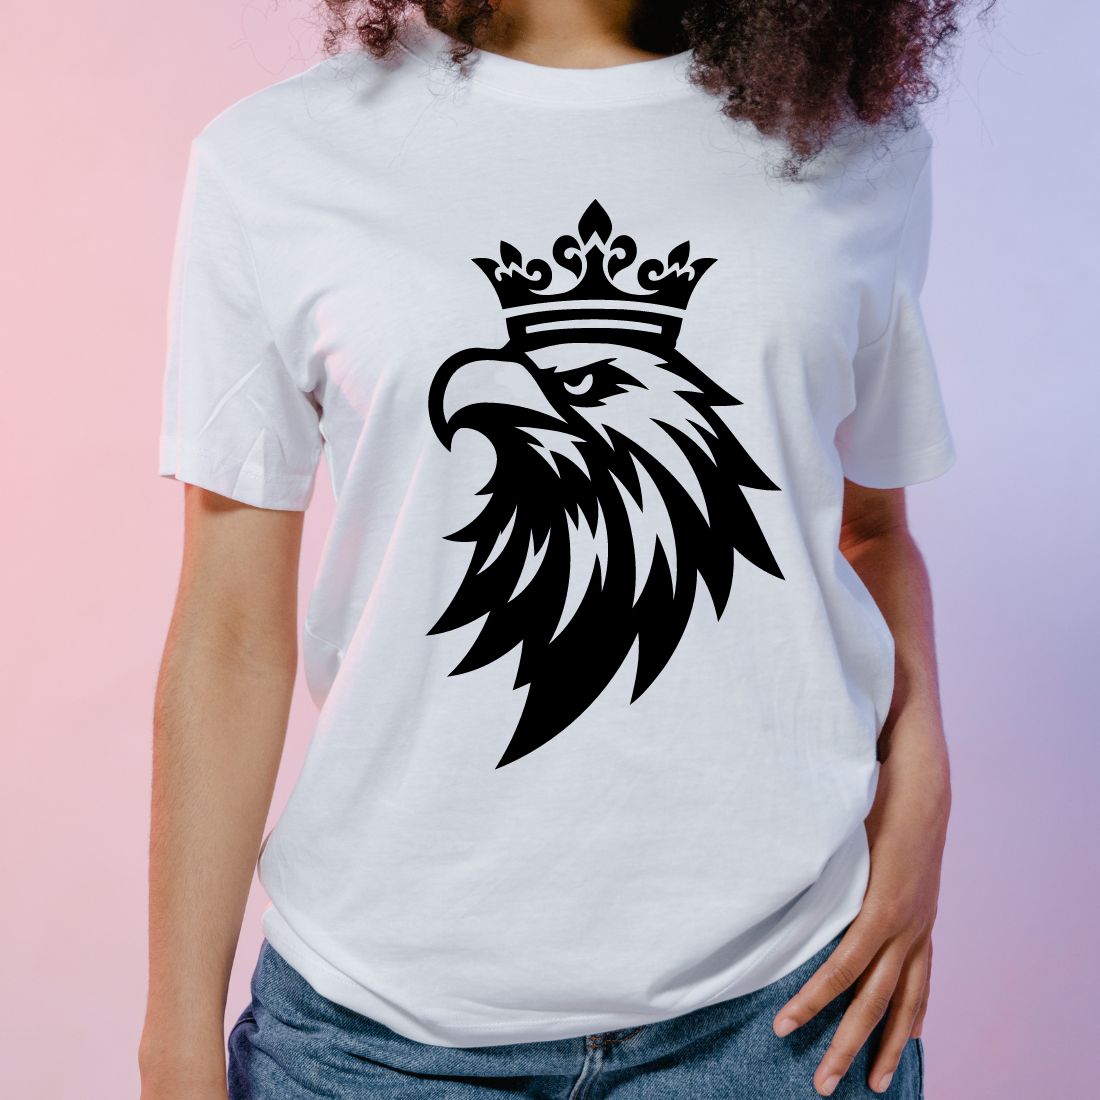 Eagle t-shirt design cover image.